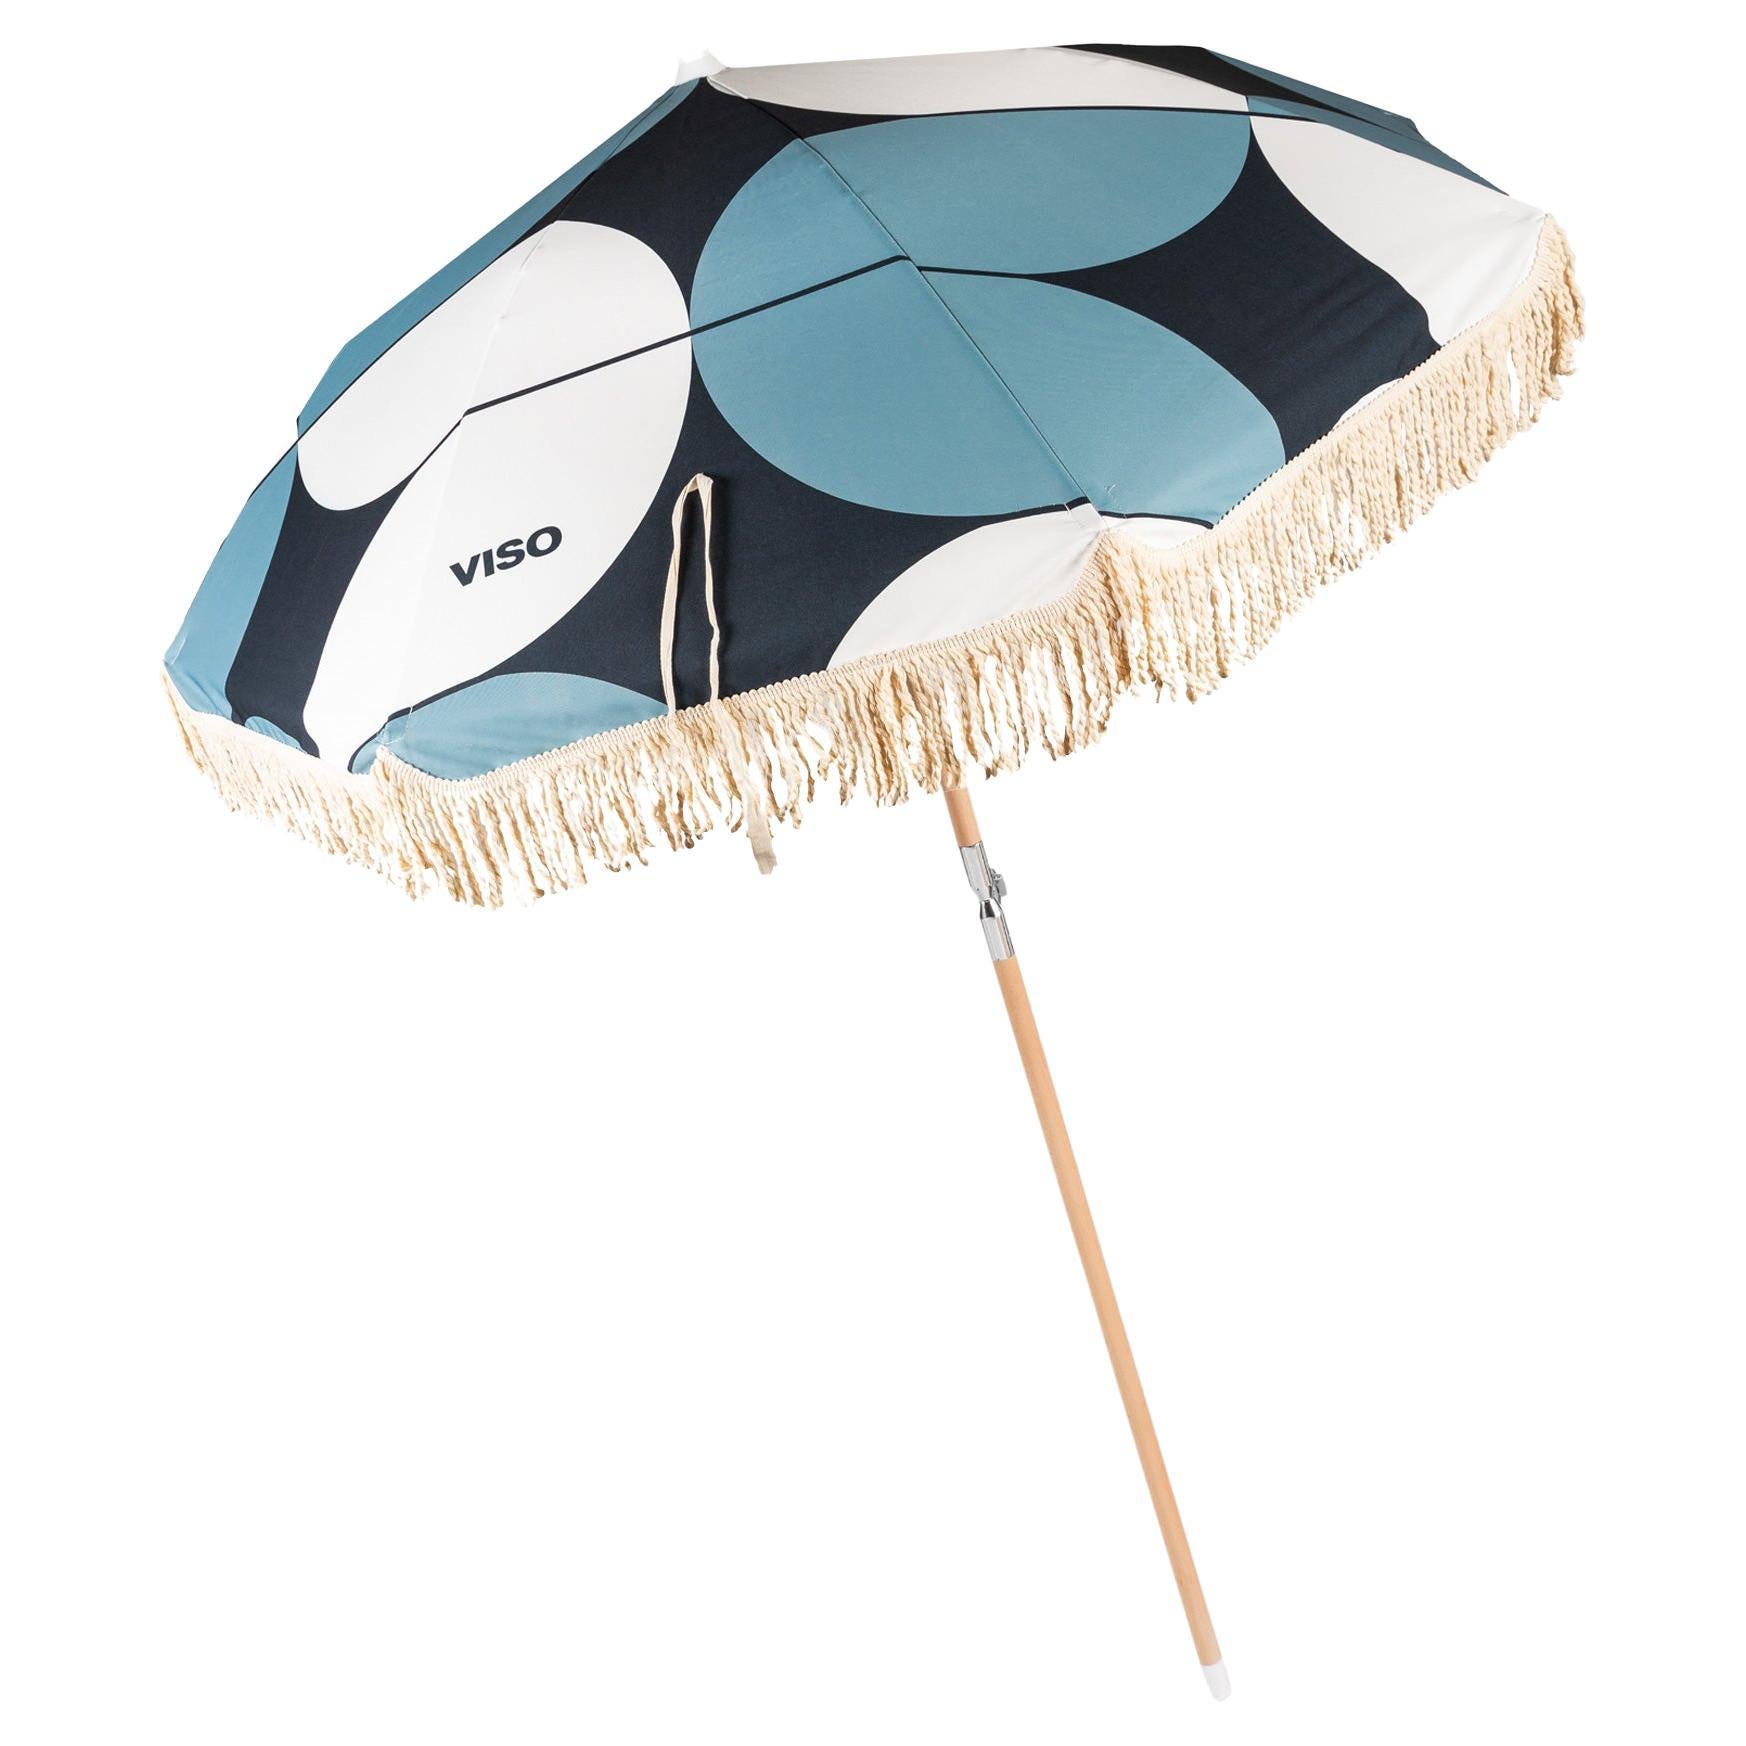 Viso Beach Umbrella 0103 in Canvas and Wood Pole